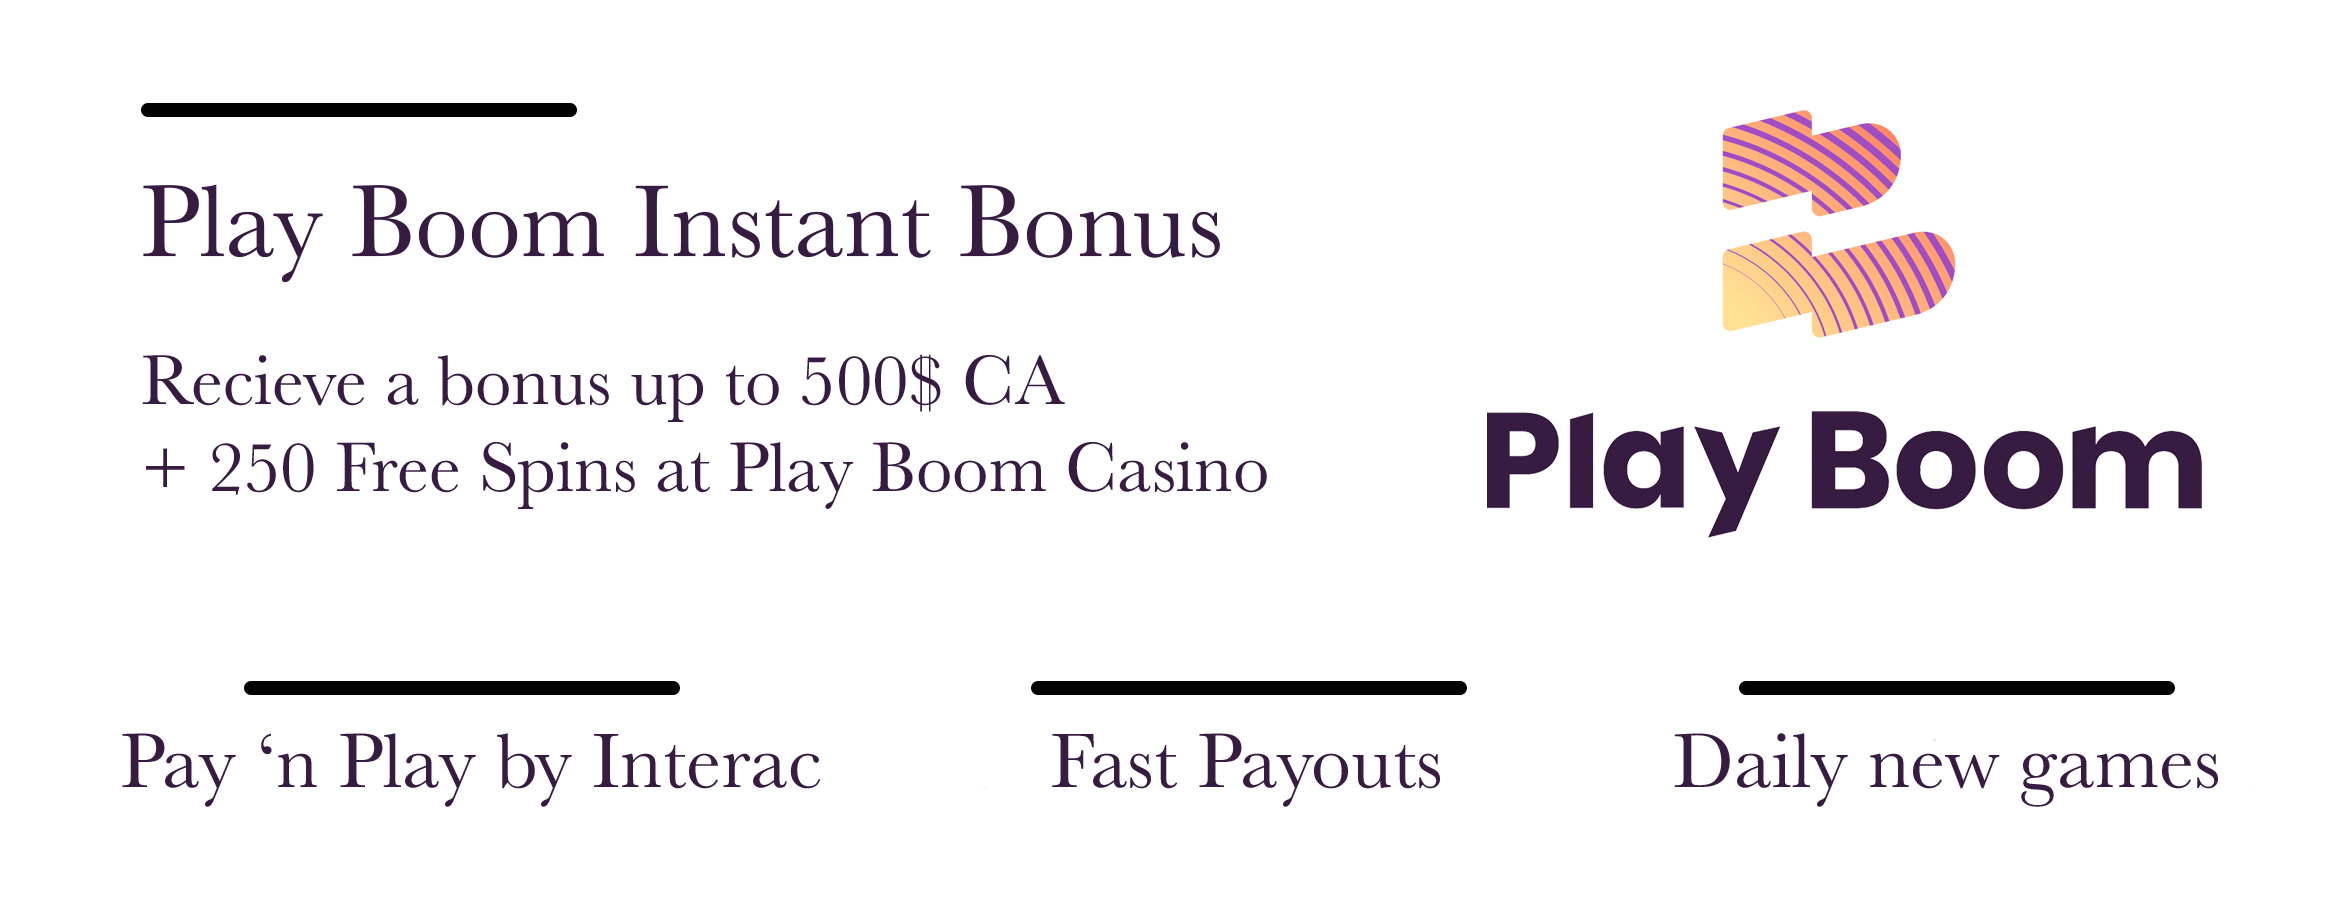 PlayBoom Casino